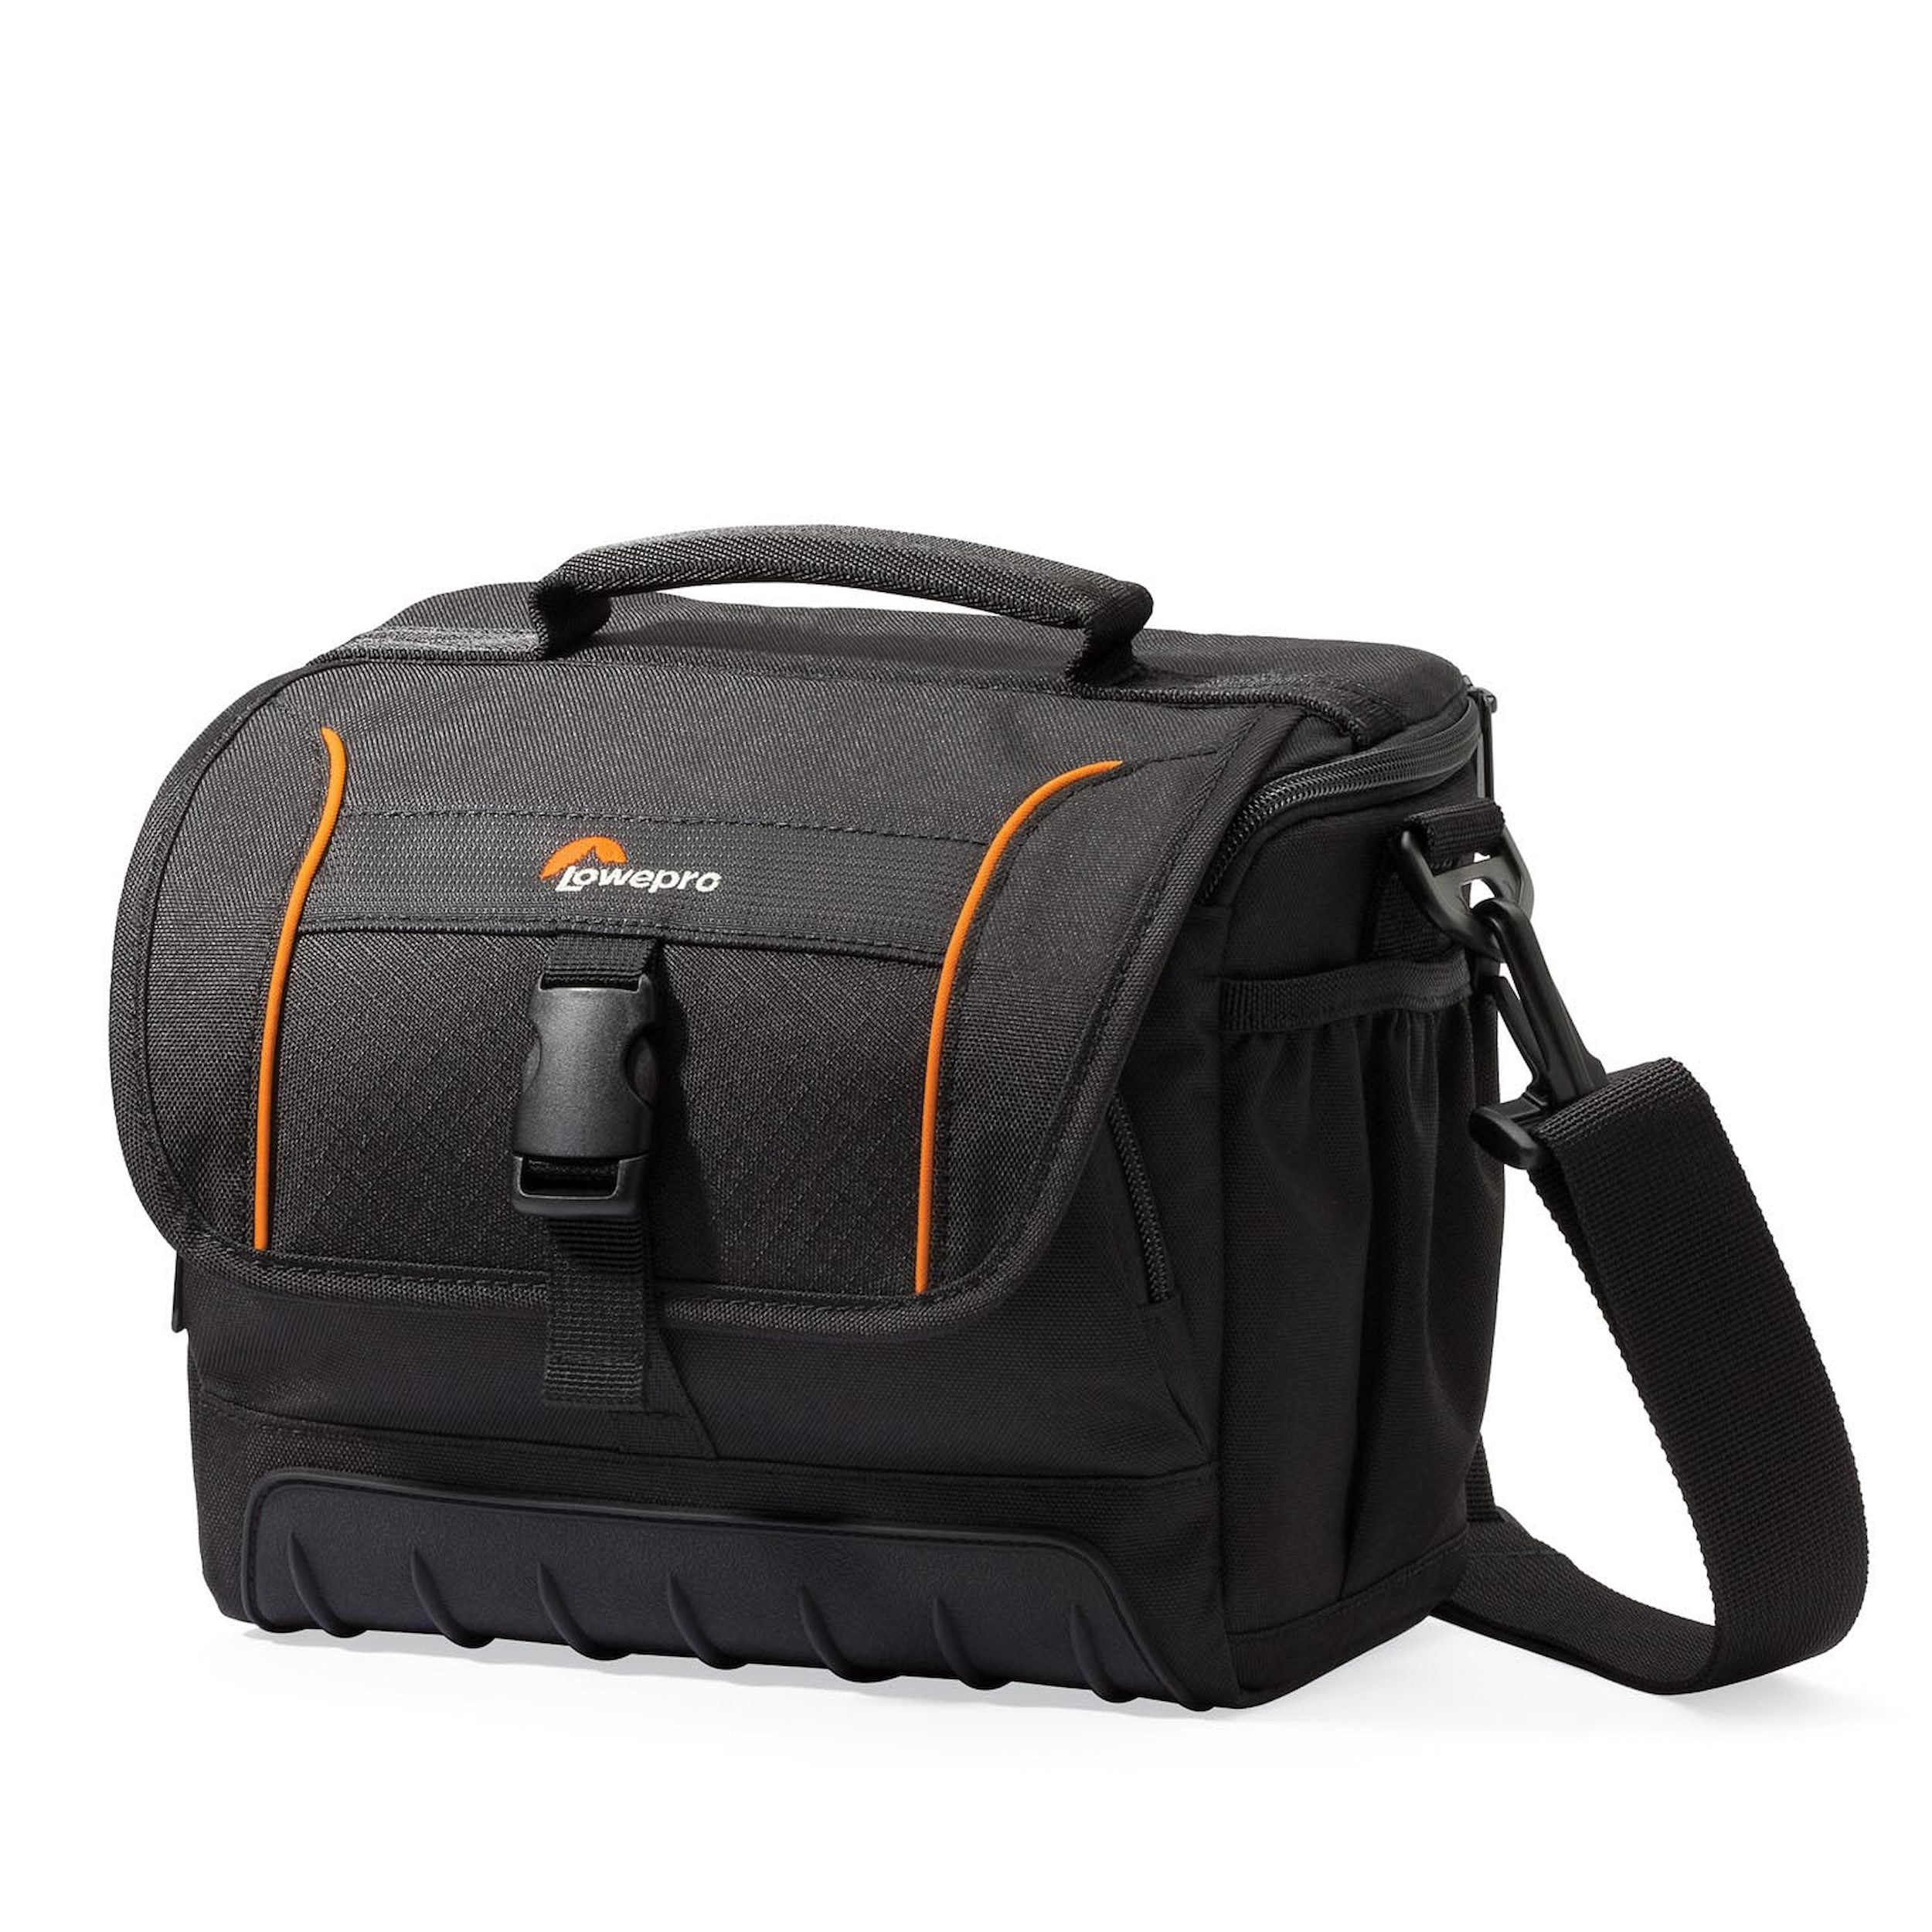 Lowepro Camera Bag Adventura SH 160 II (Black)